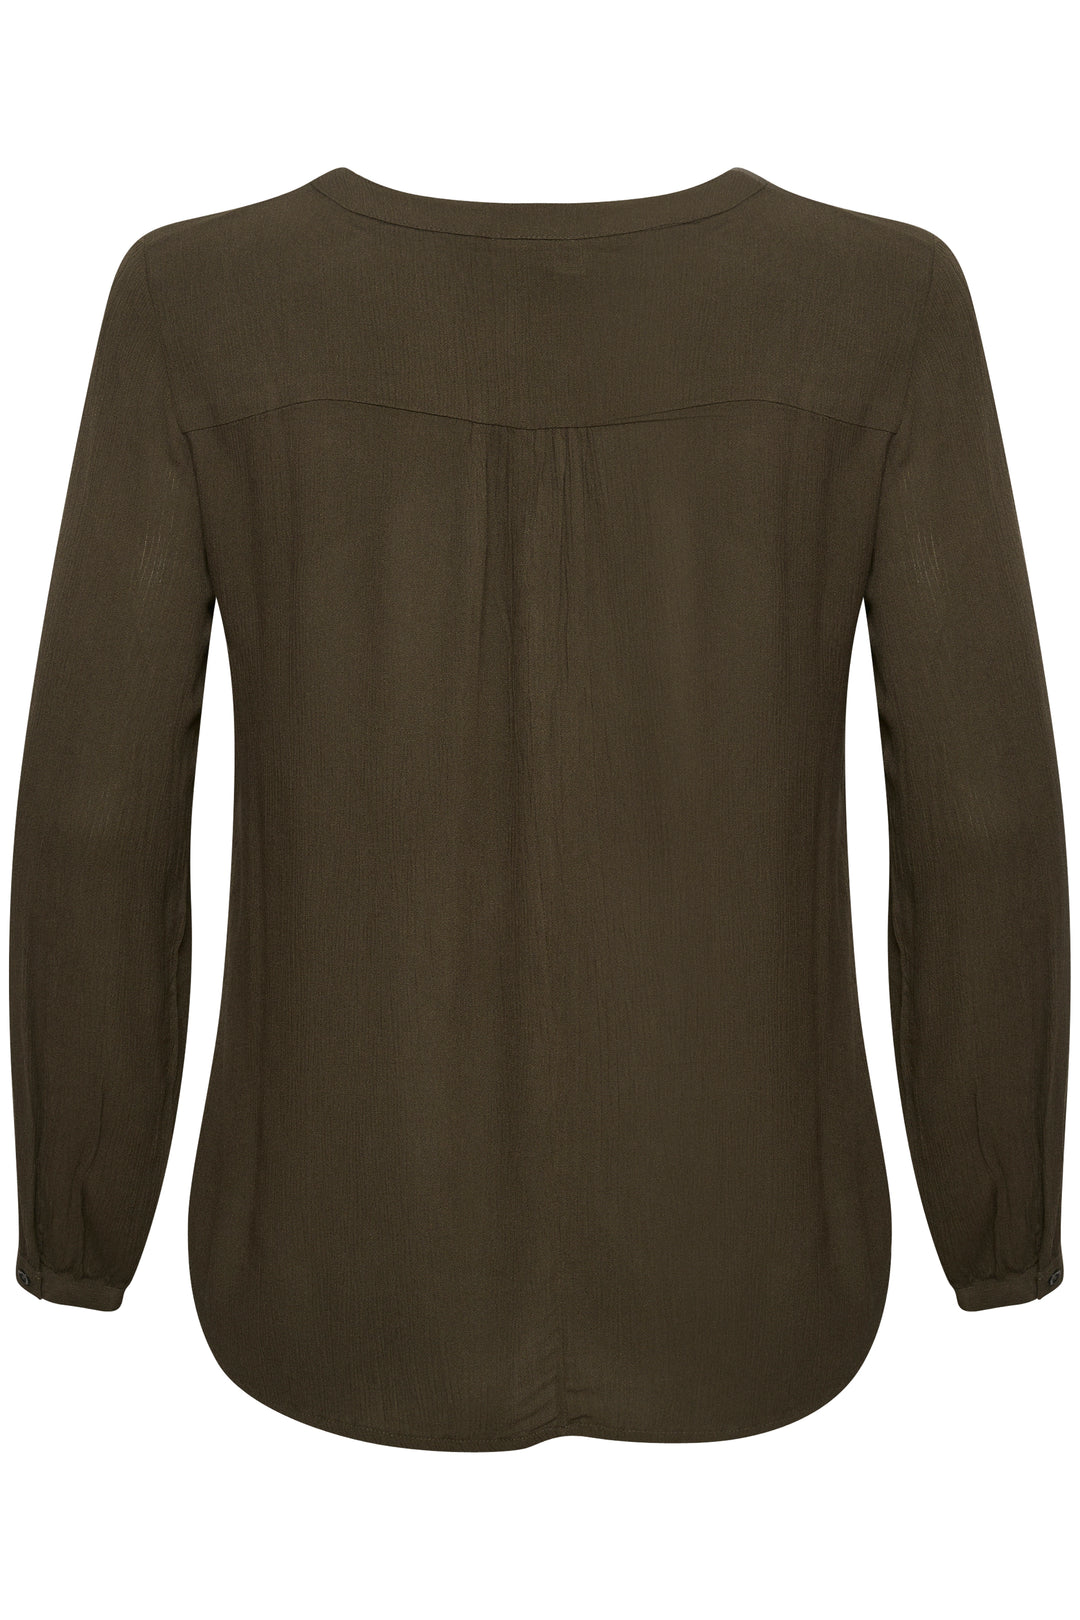 tijdloze kaki blouse van ecovero viscose - kaffe curve - - grote maten - dameskleding - kledingwinkel - herent - leuven